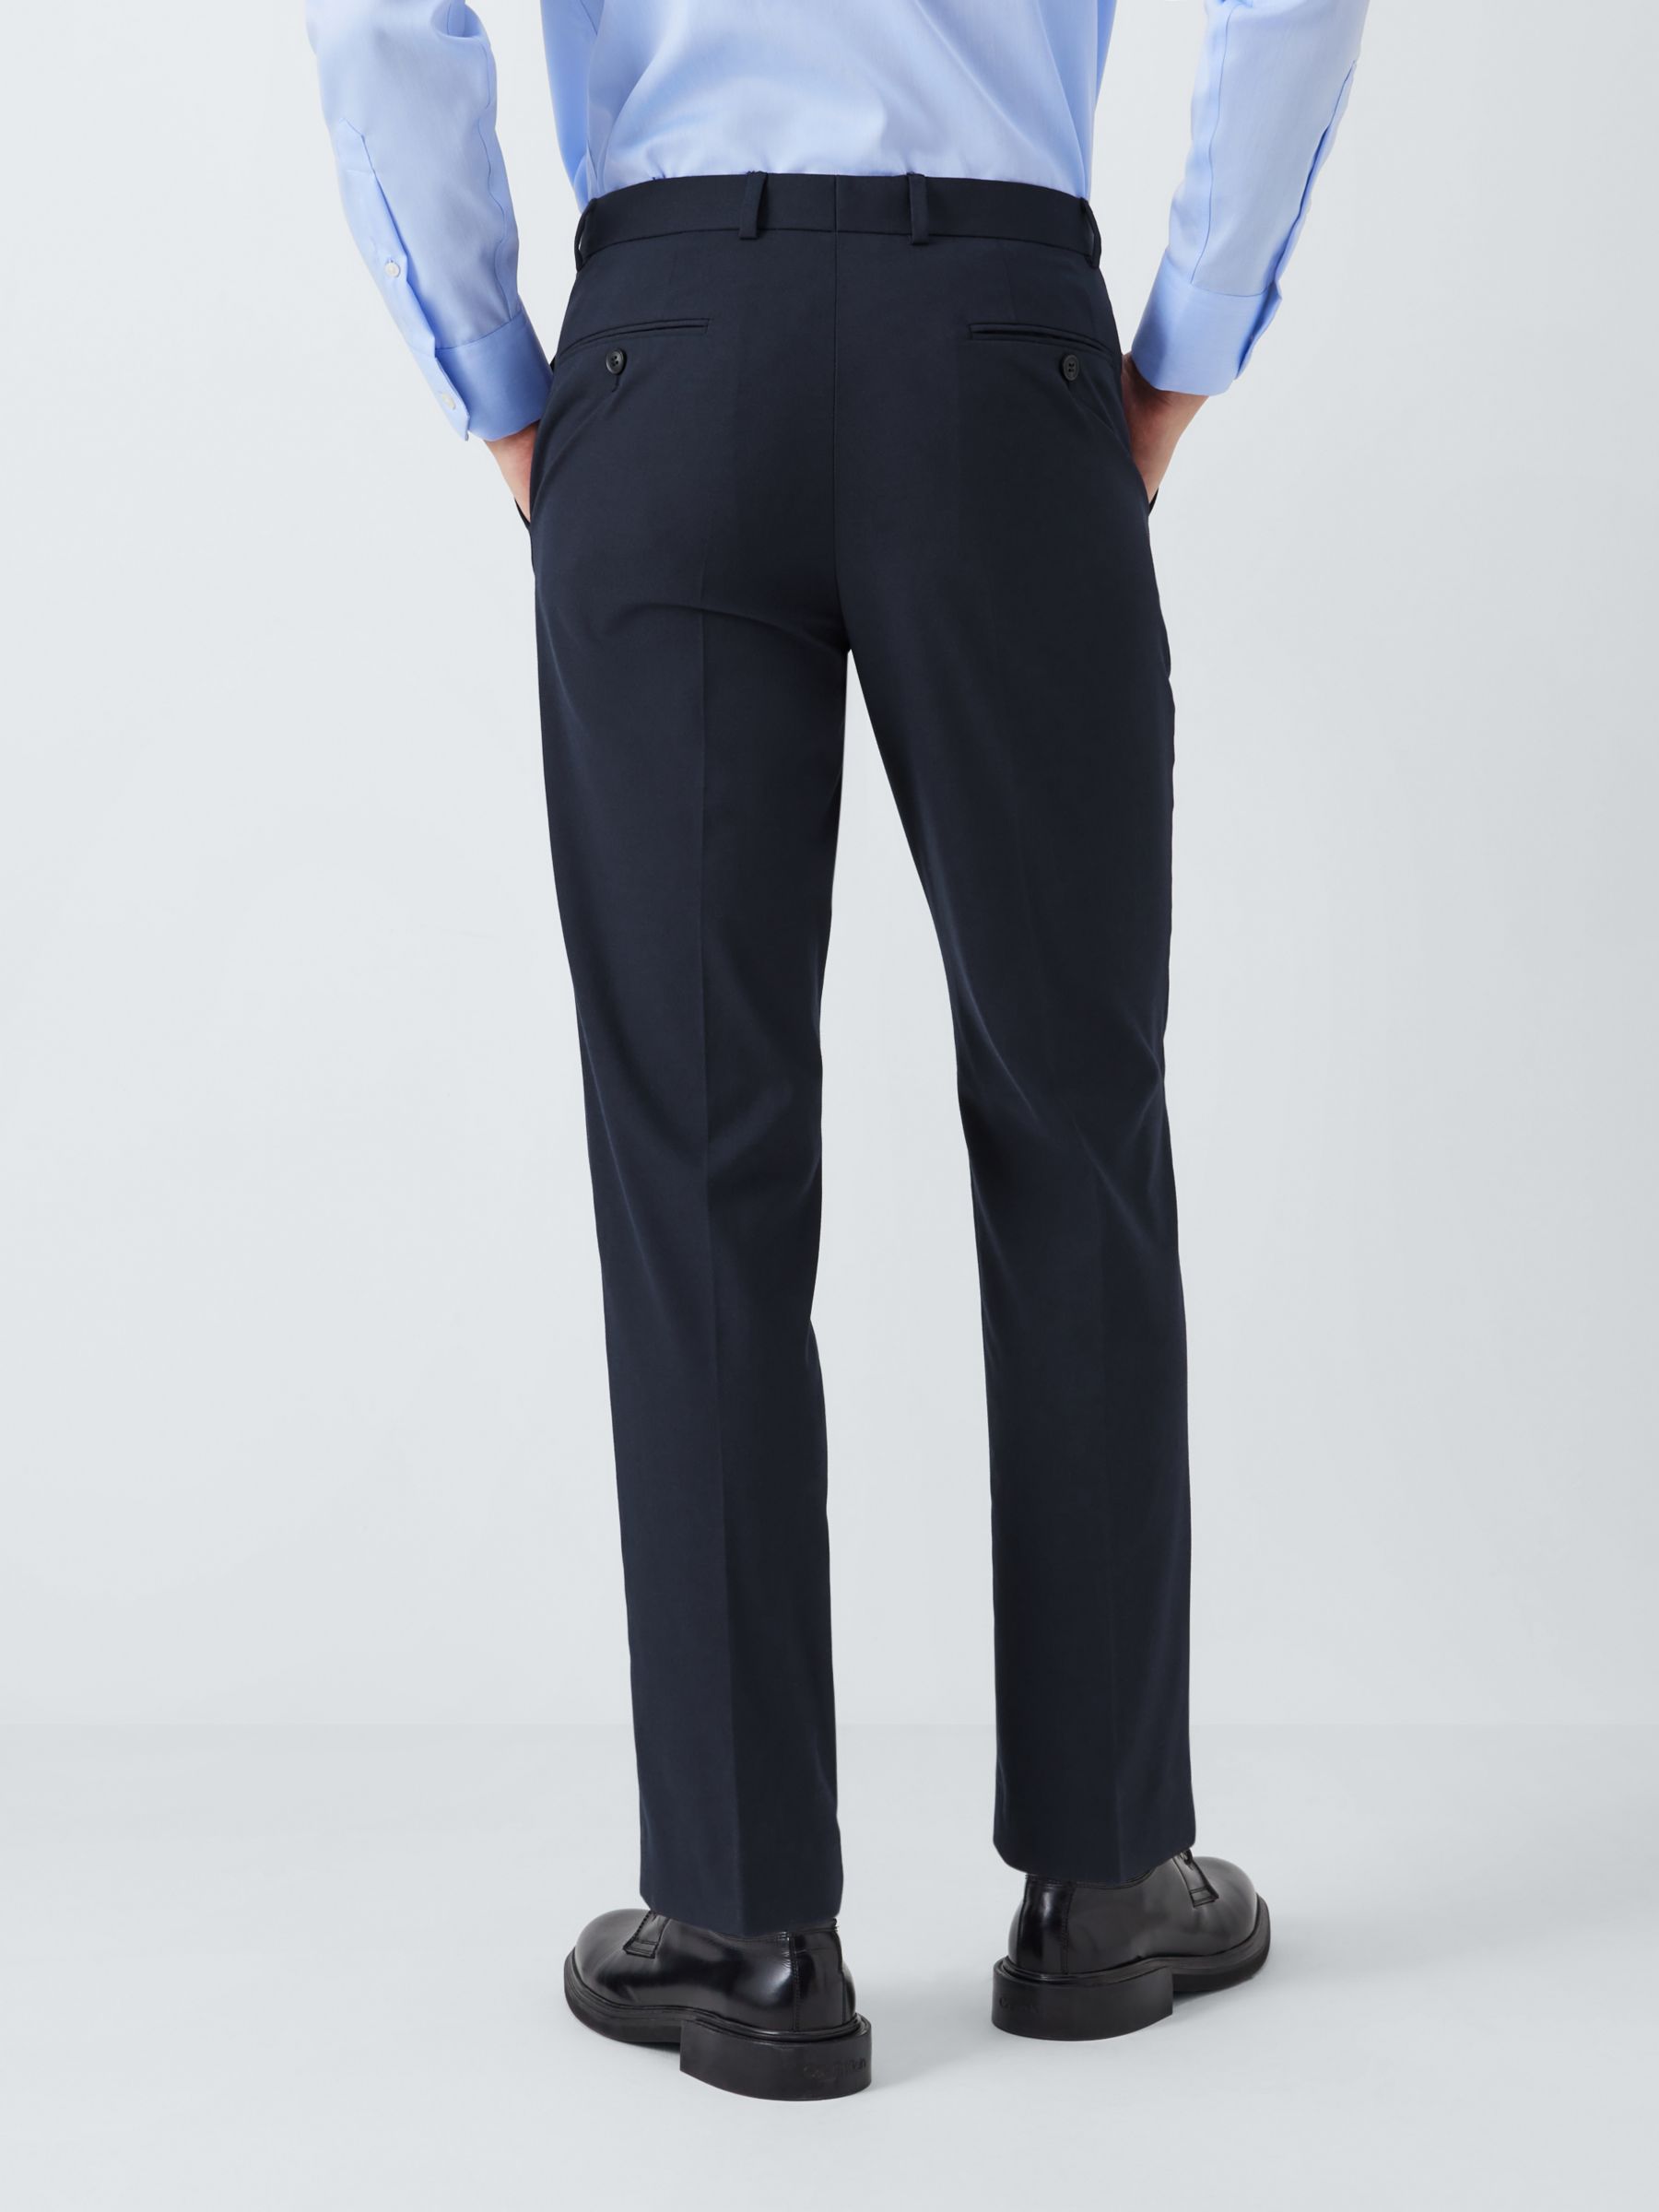 John Lewis Slim Fit Starter Suit Trousers, Navy at John Lewis & Partners